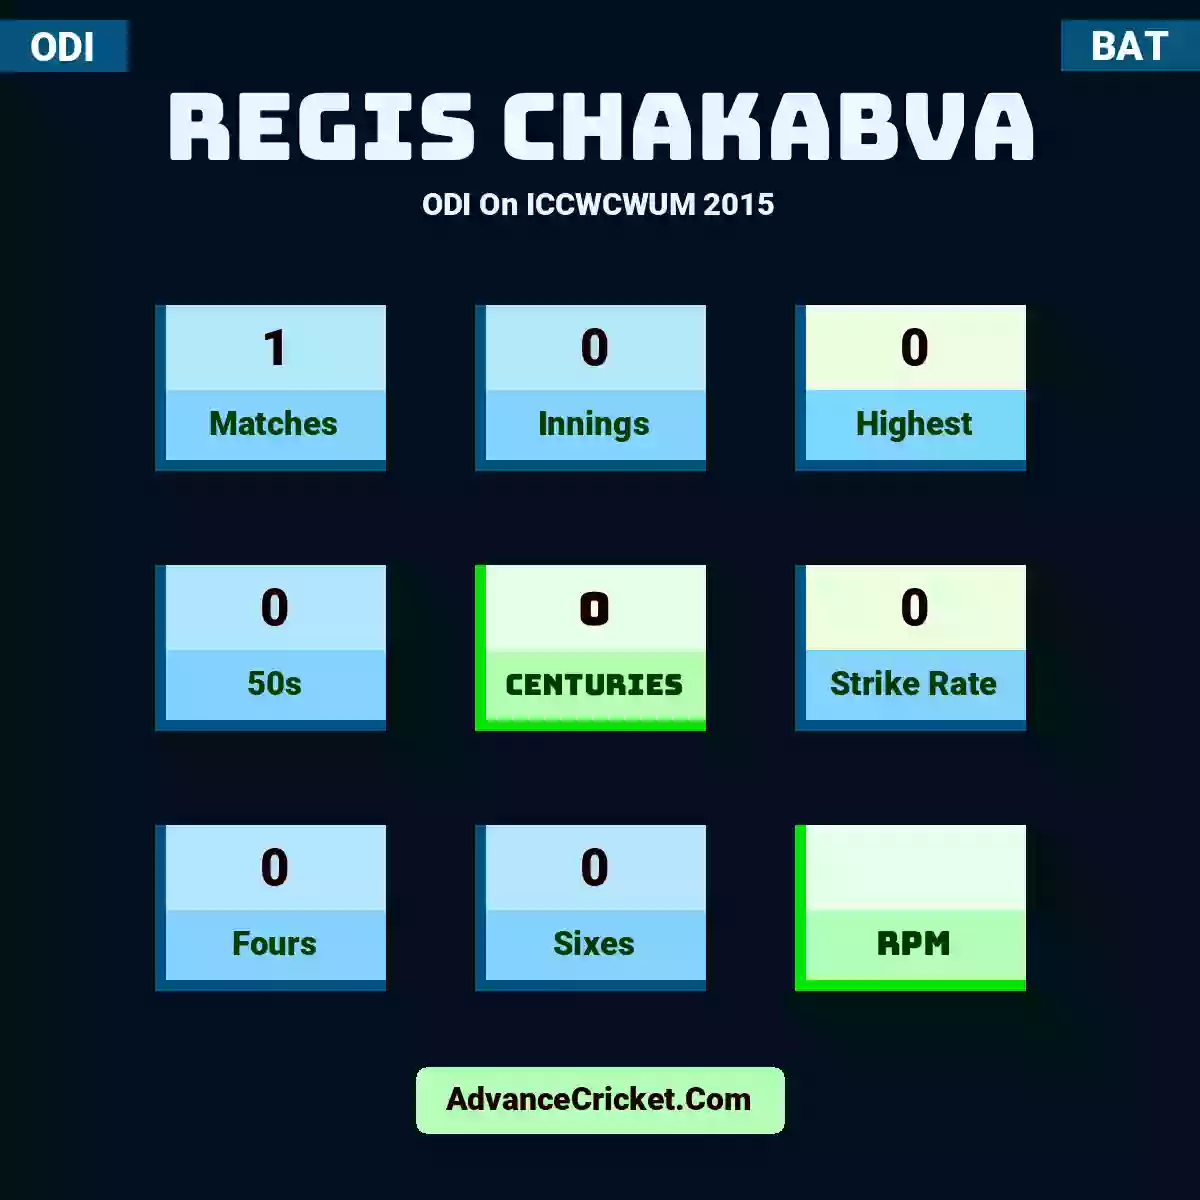 Regis Chakabva ODI  On ICCWCWUM 2015, Regis Chakabva played 1 matches, scored 0 runs as highest, 0 half-centuries, and 0 centuries, with a strike rate of 0. R.Chakabva hit 0 fours and 0 sixes.